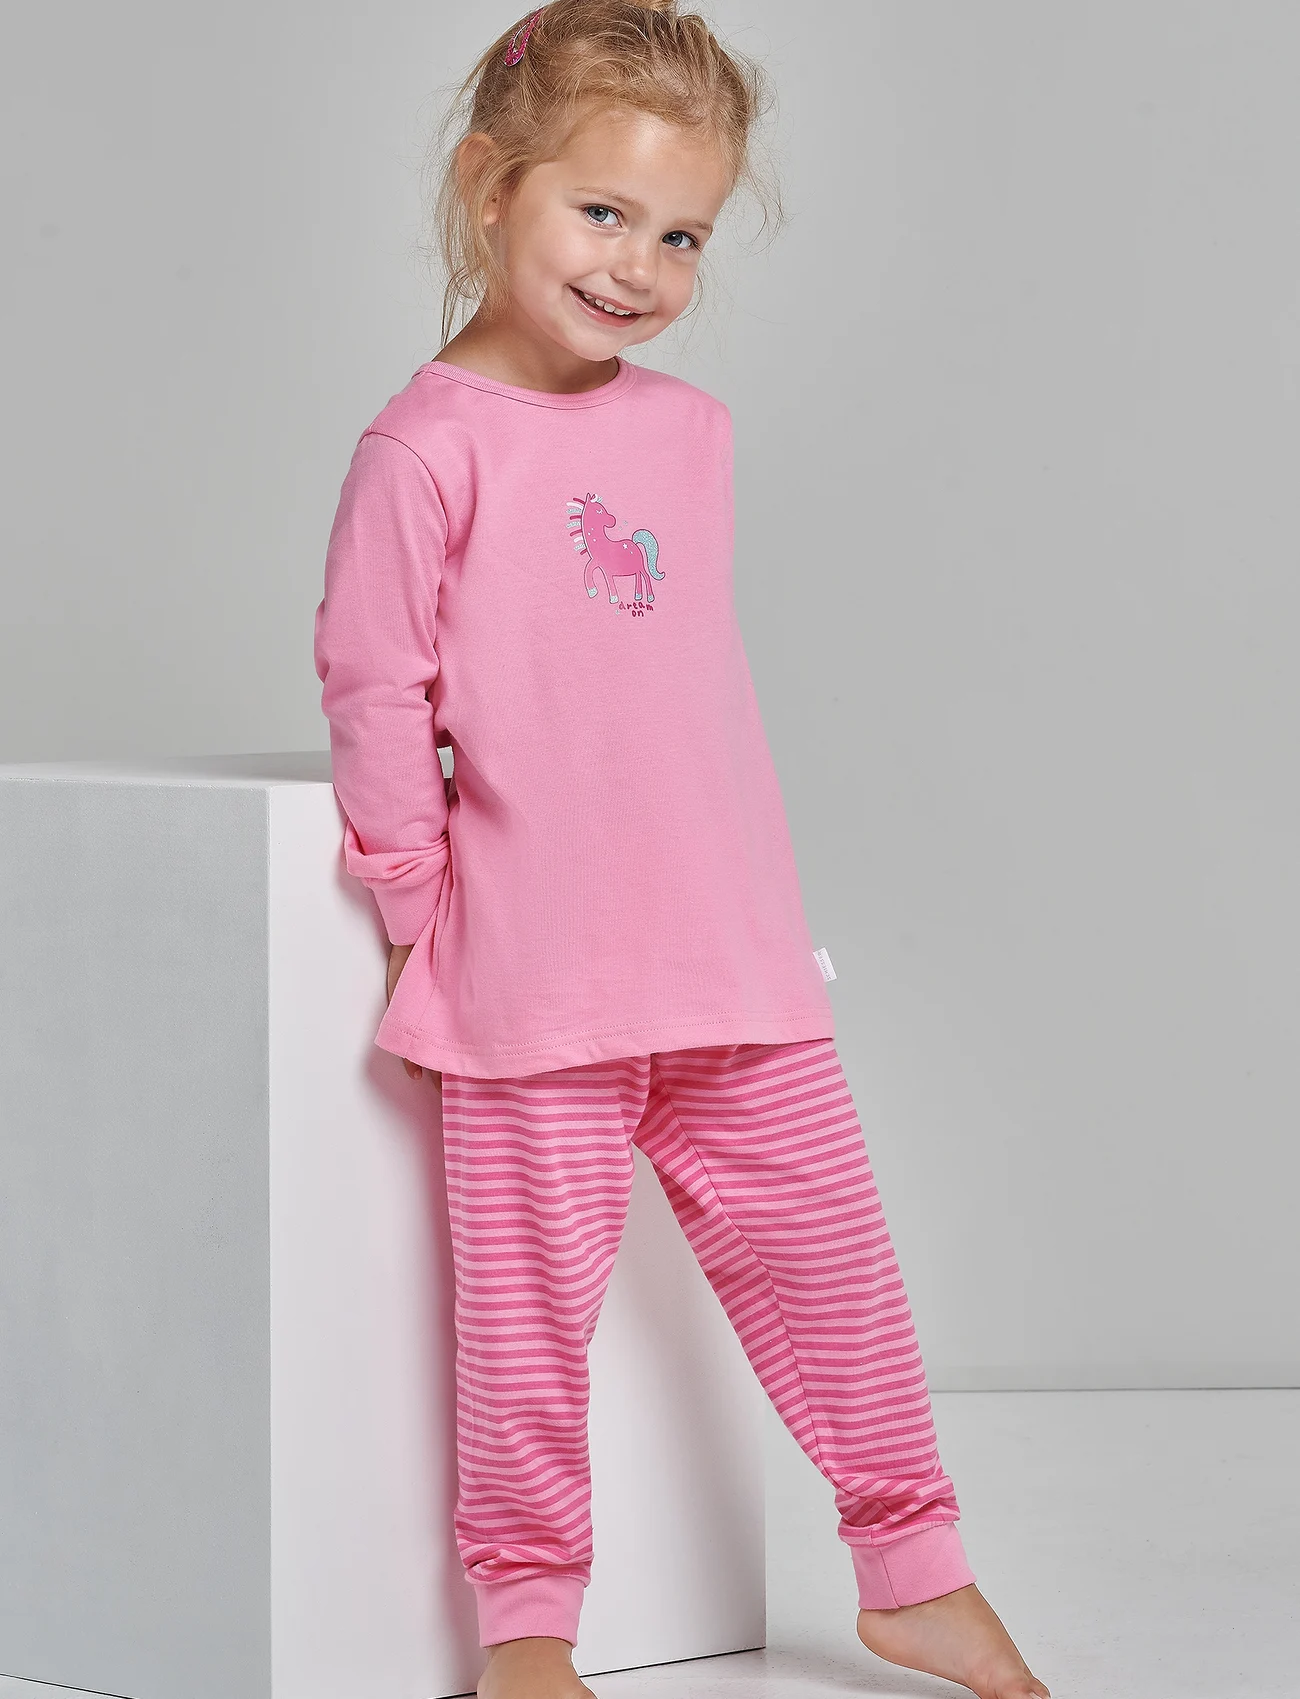 Schiesser - Girls Pyjama Long - sets - rose - 1